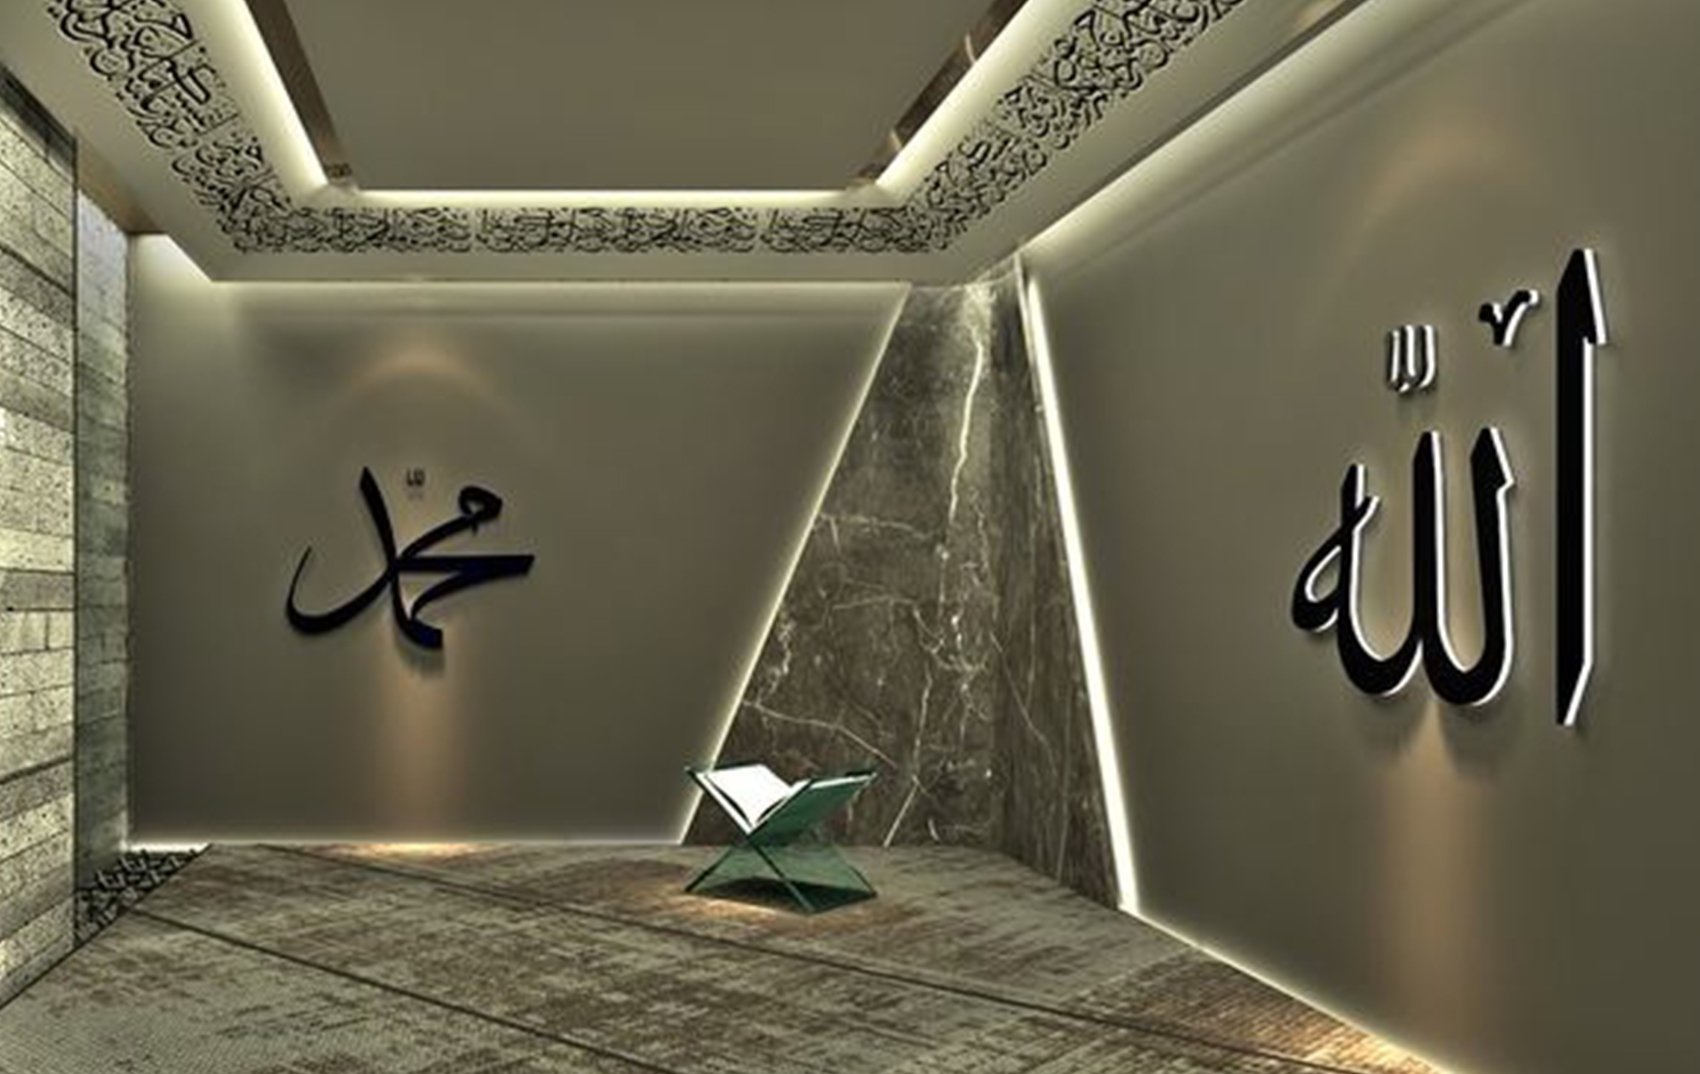 Мусульманская 15. Мусульманская молельная комната. Интерьер комнаты для намаза. Комната для молитвы мусульман. Исламский дизайн комнаты.